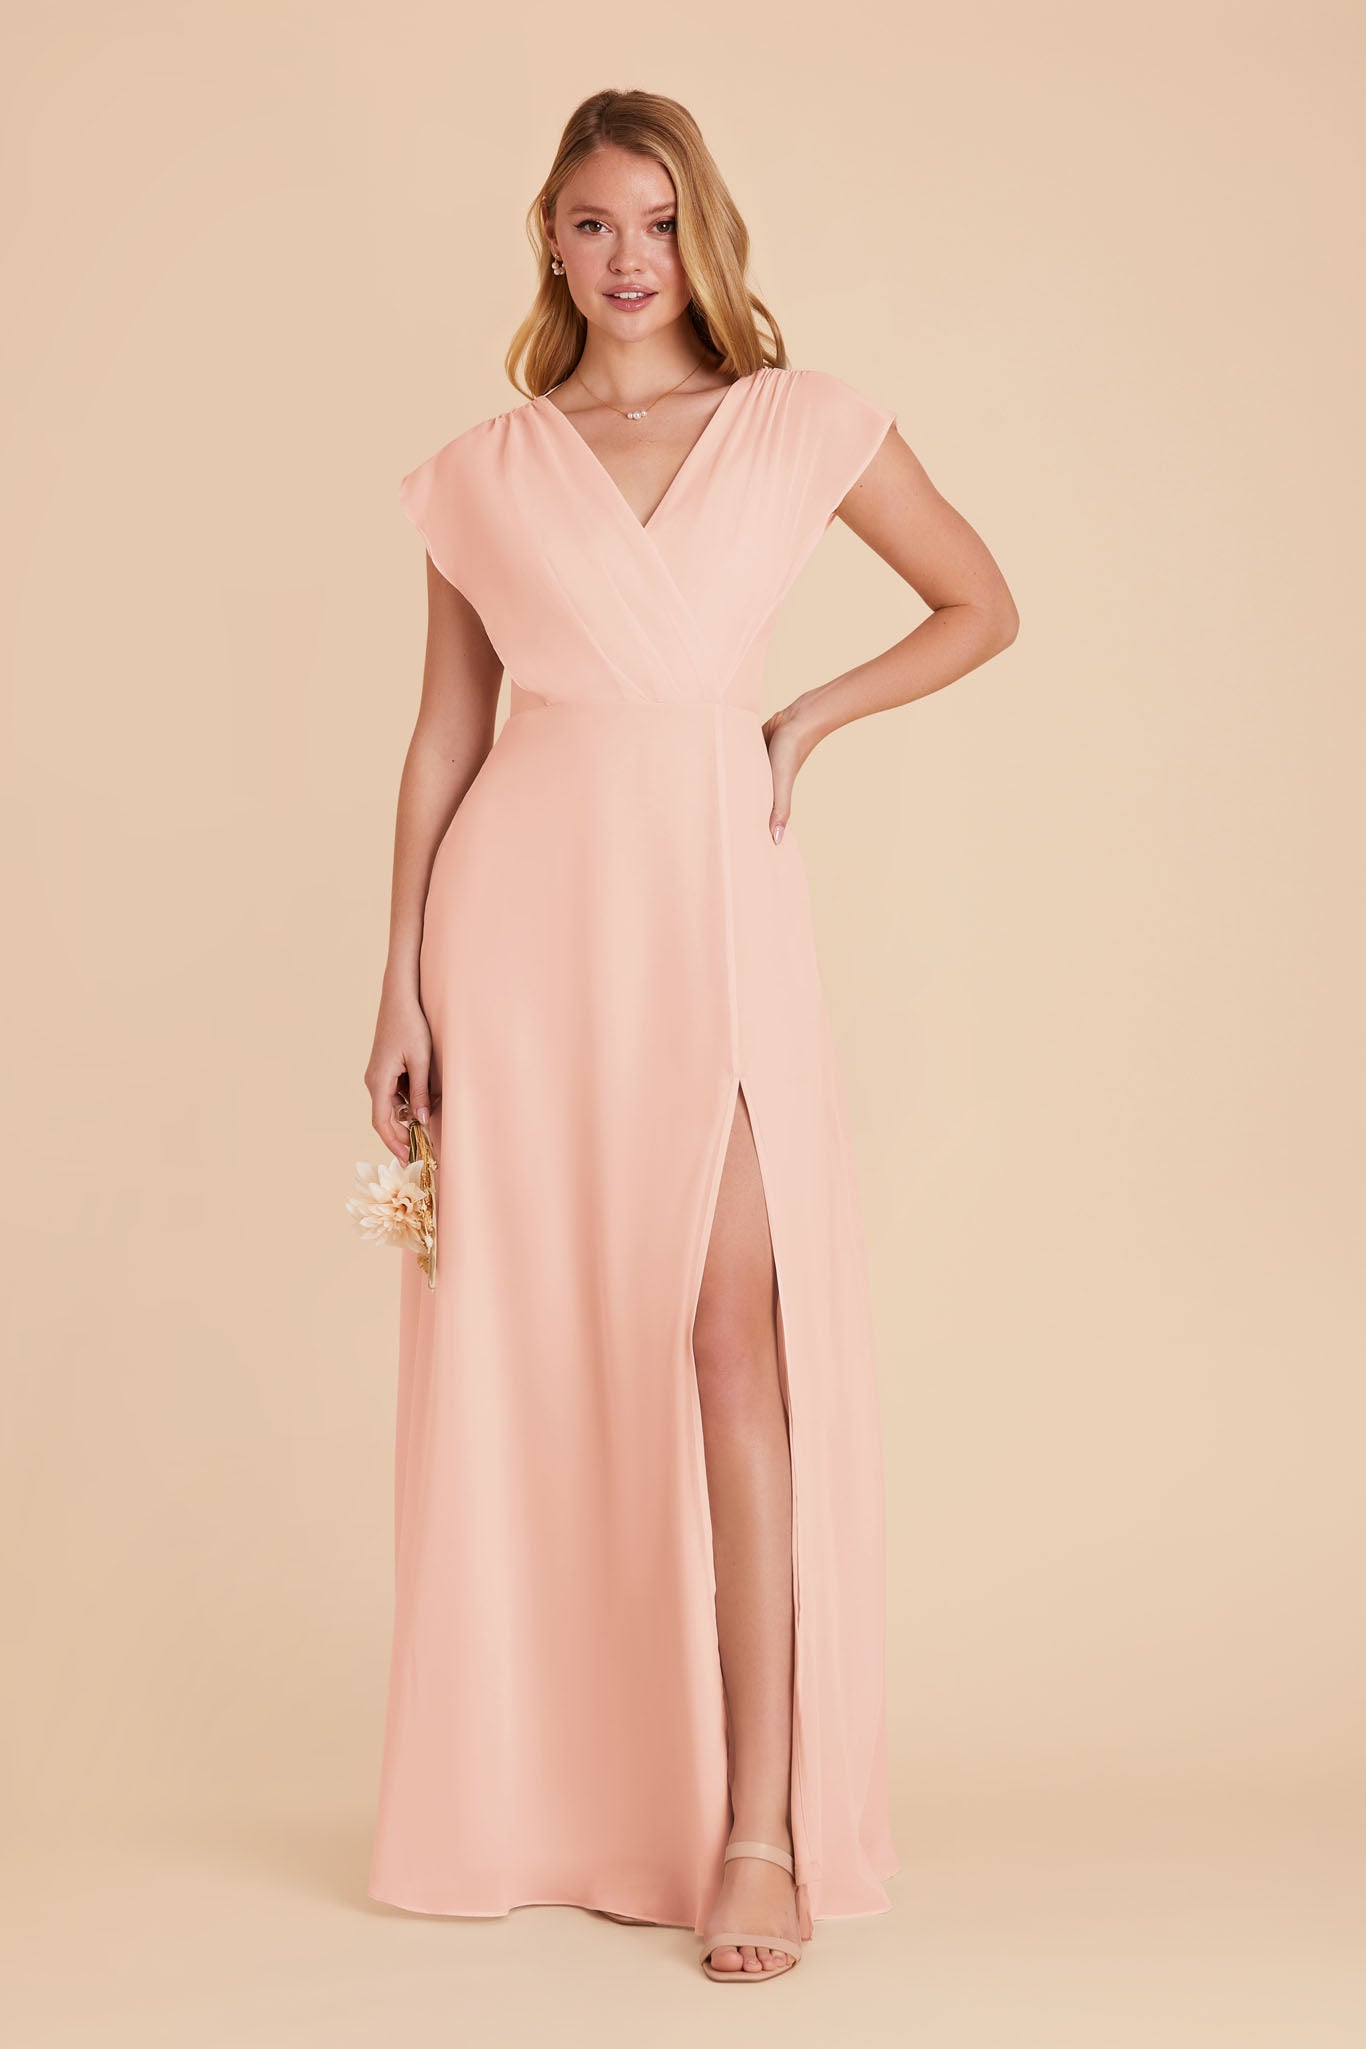 Blush Pink Violet Chiffon Dress by Birdy Grey